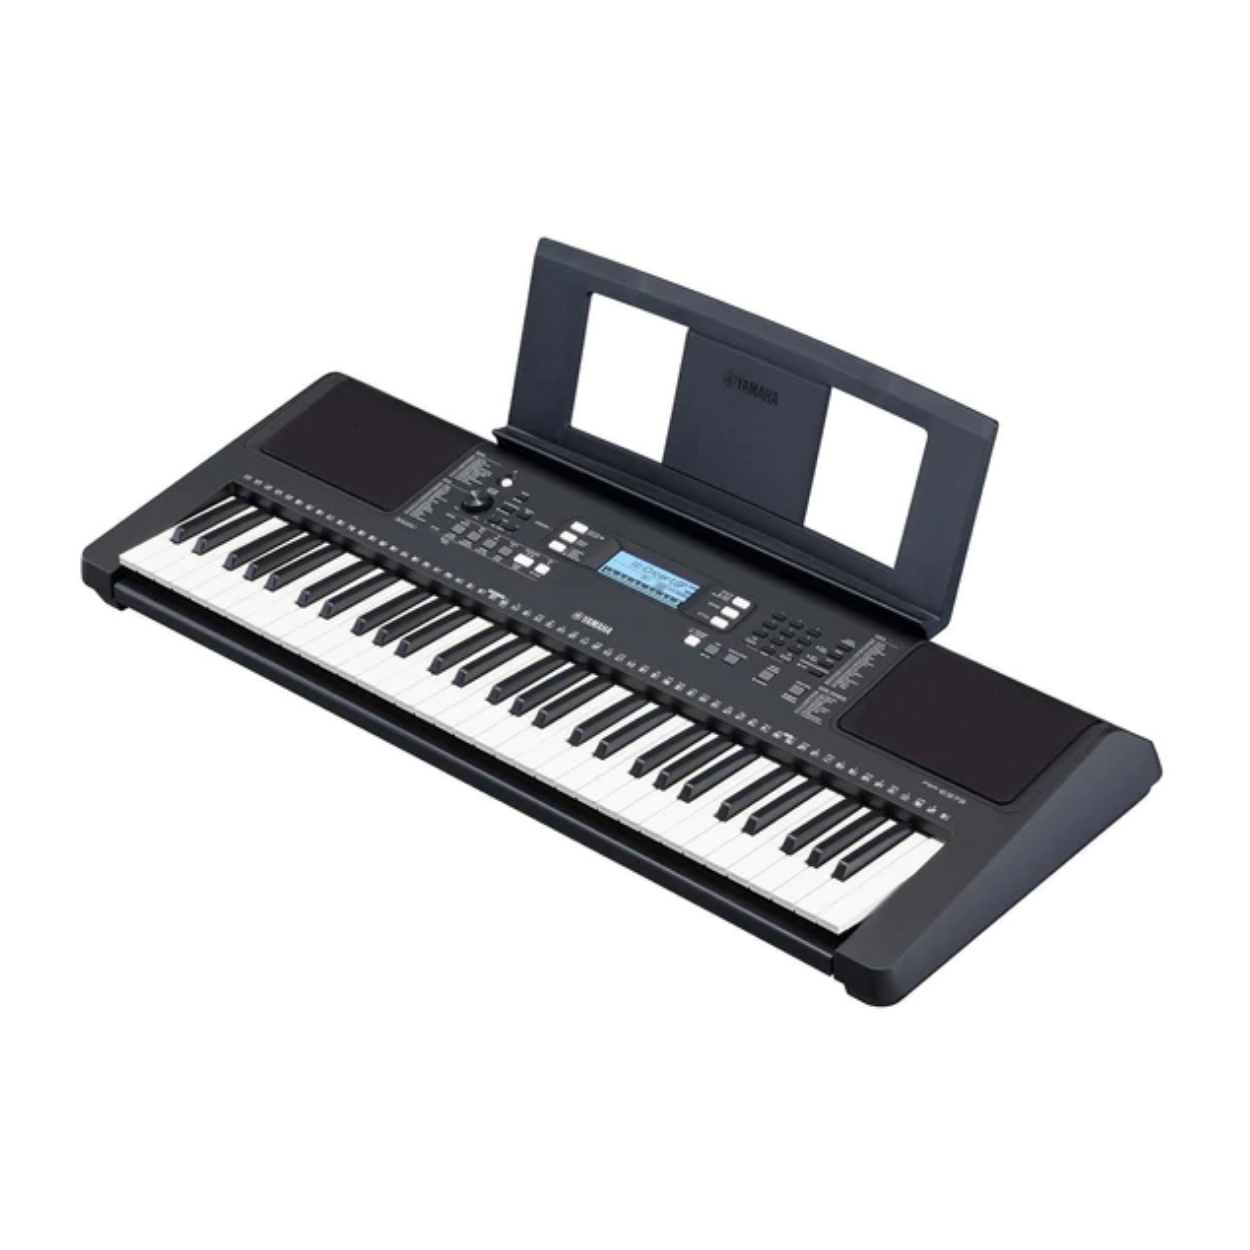 Yamaha PSR E373 61-Keys Portable Keyboard